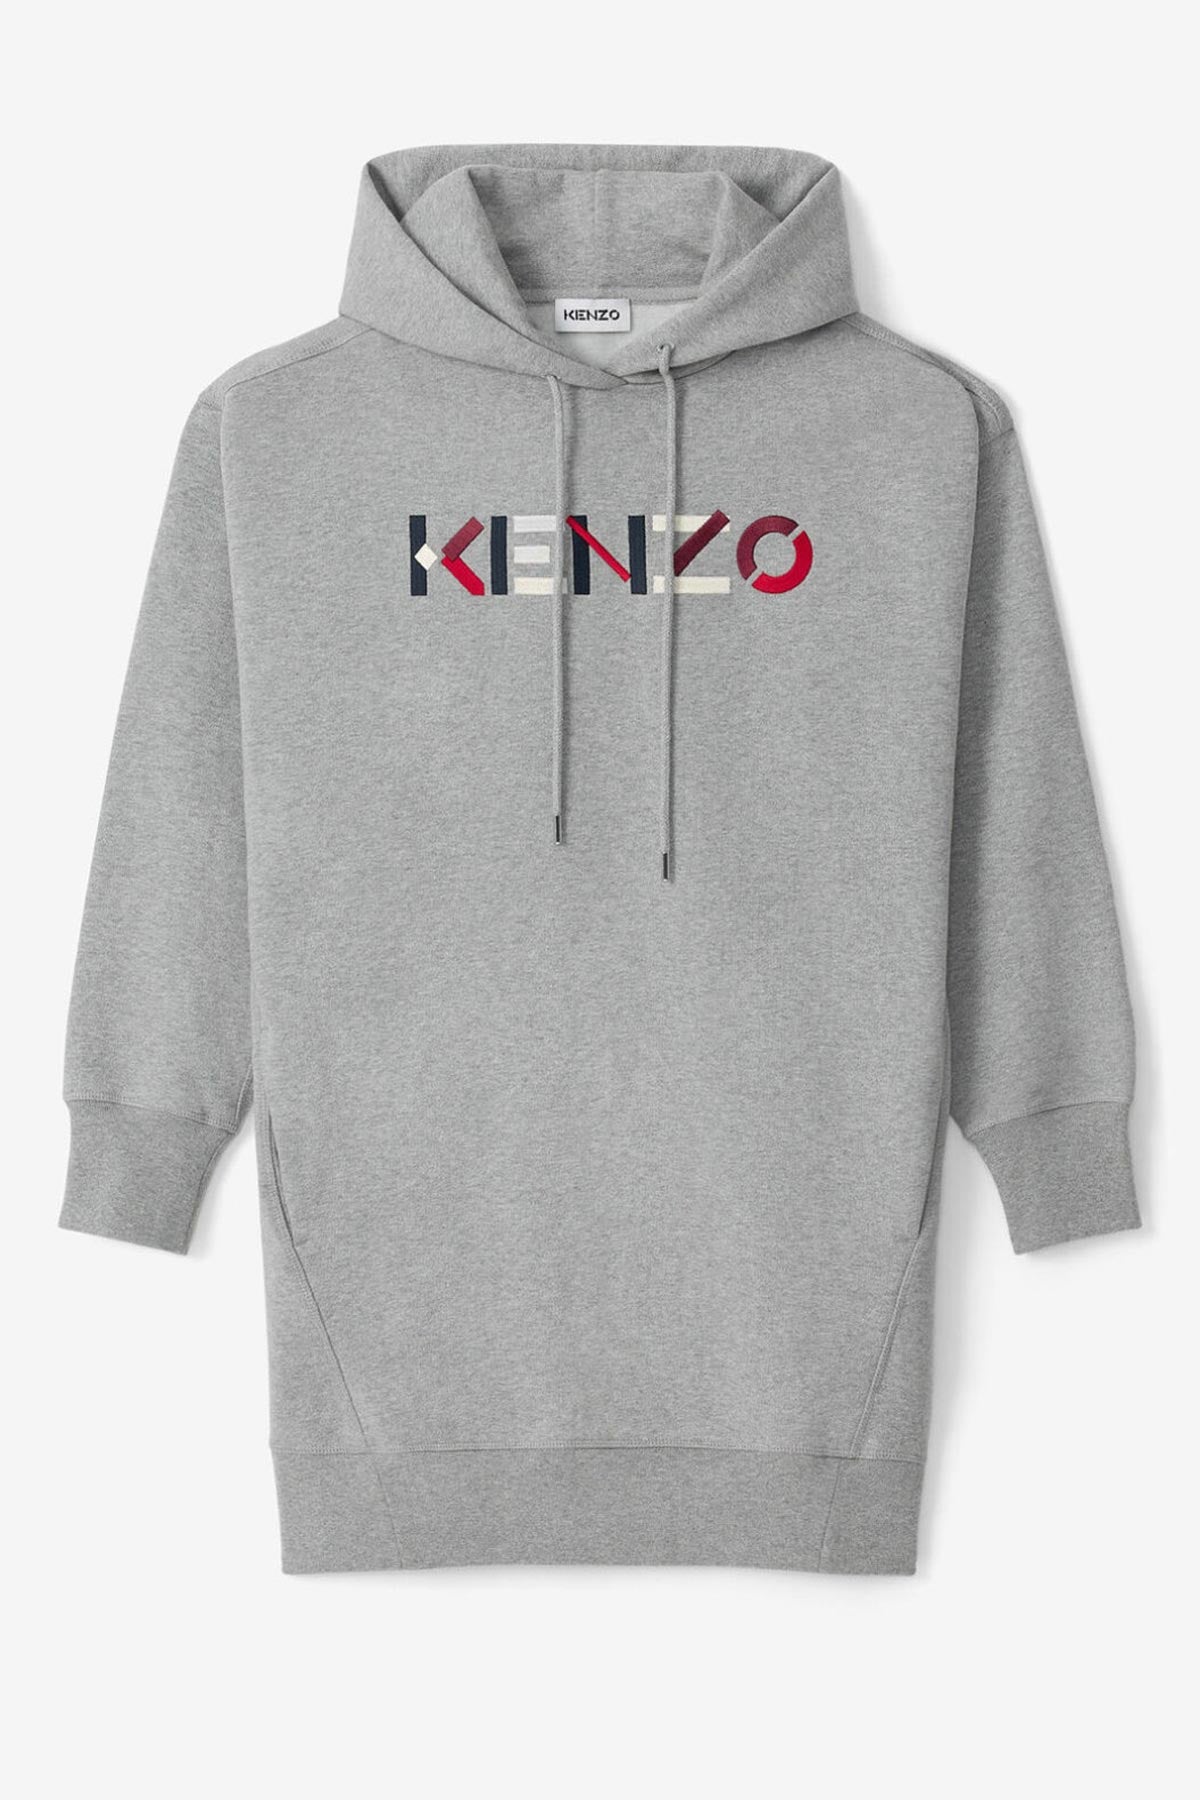 Kenzo Logo Sweatshirt Elbise-Libas Trendy Fashion Store